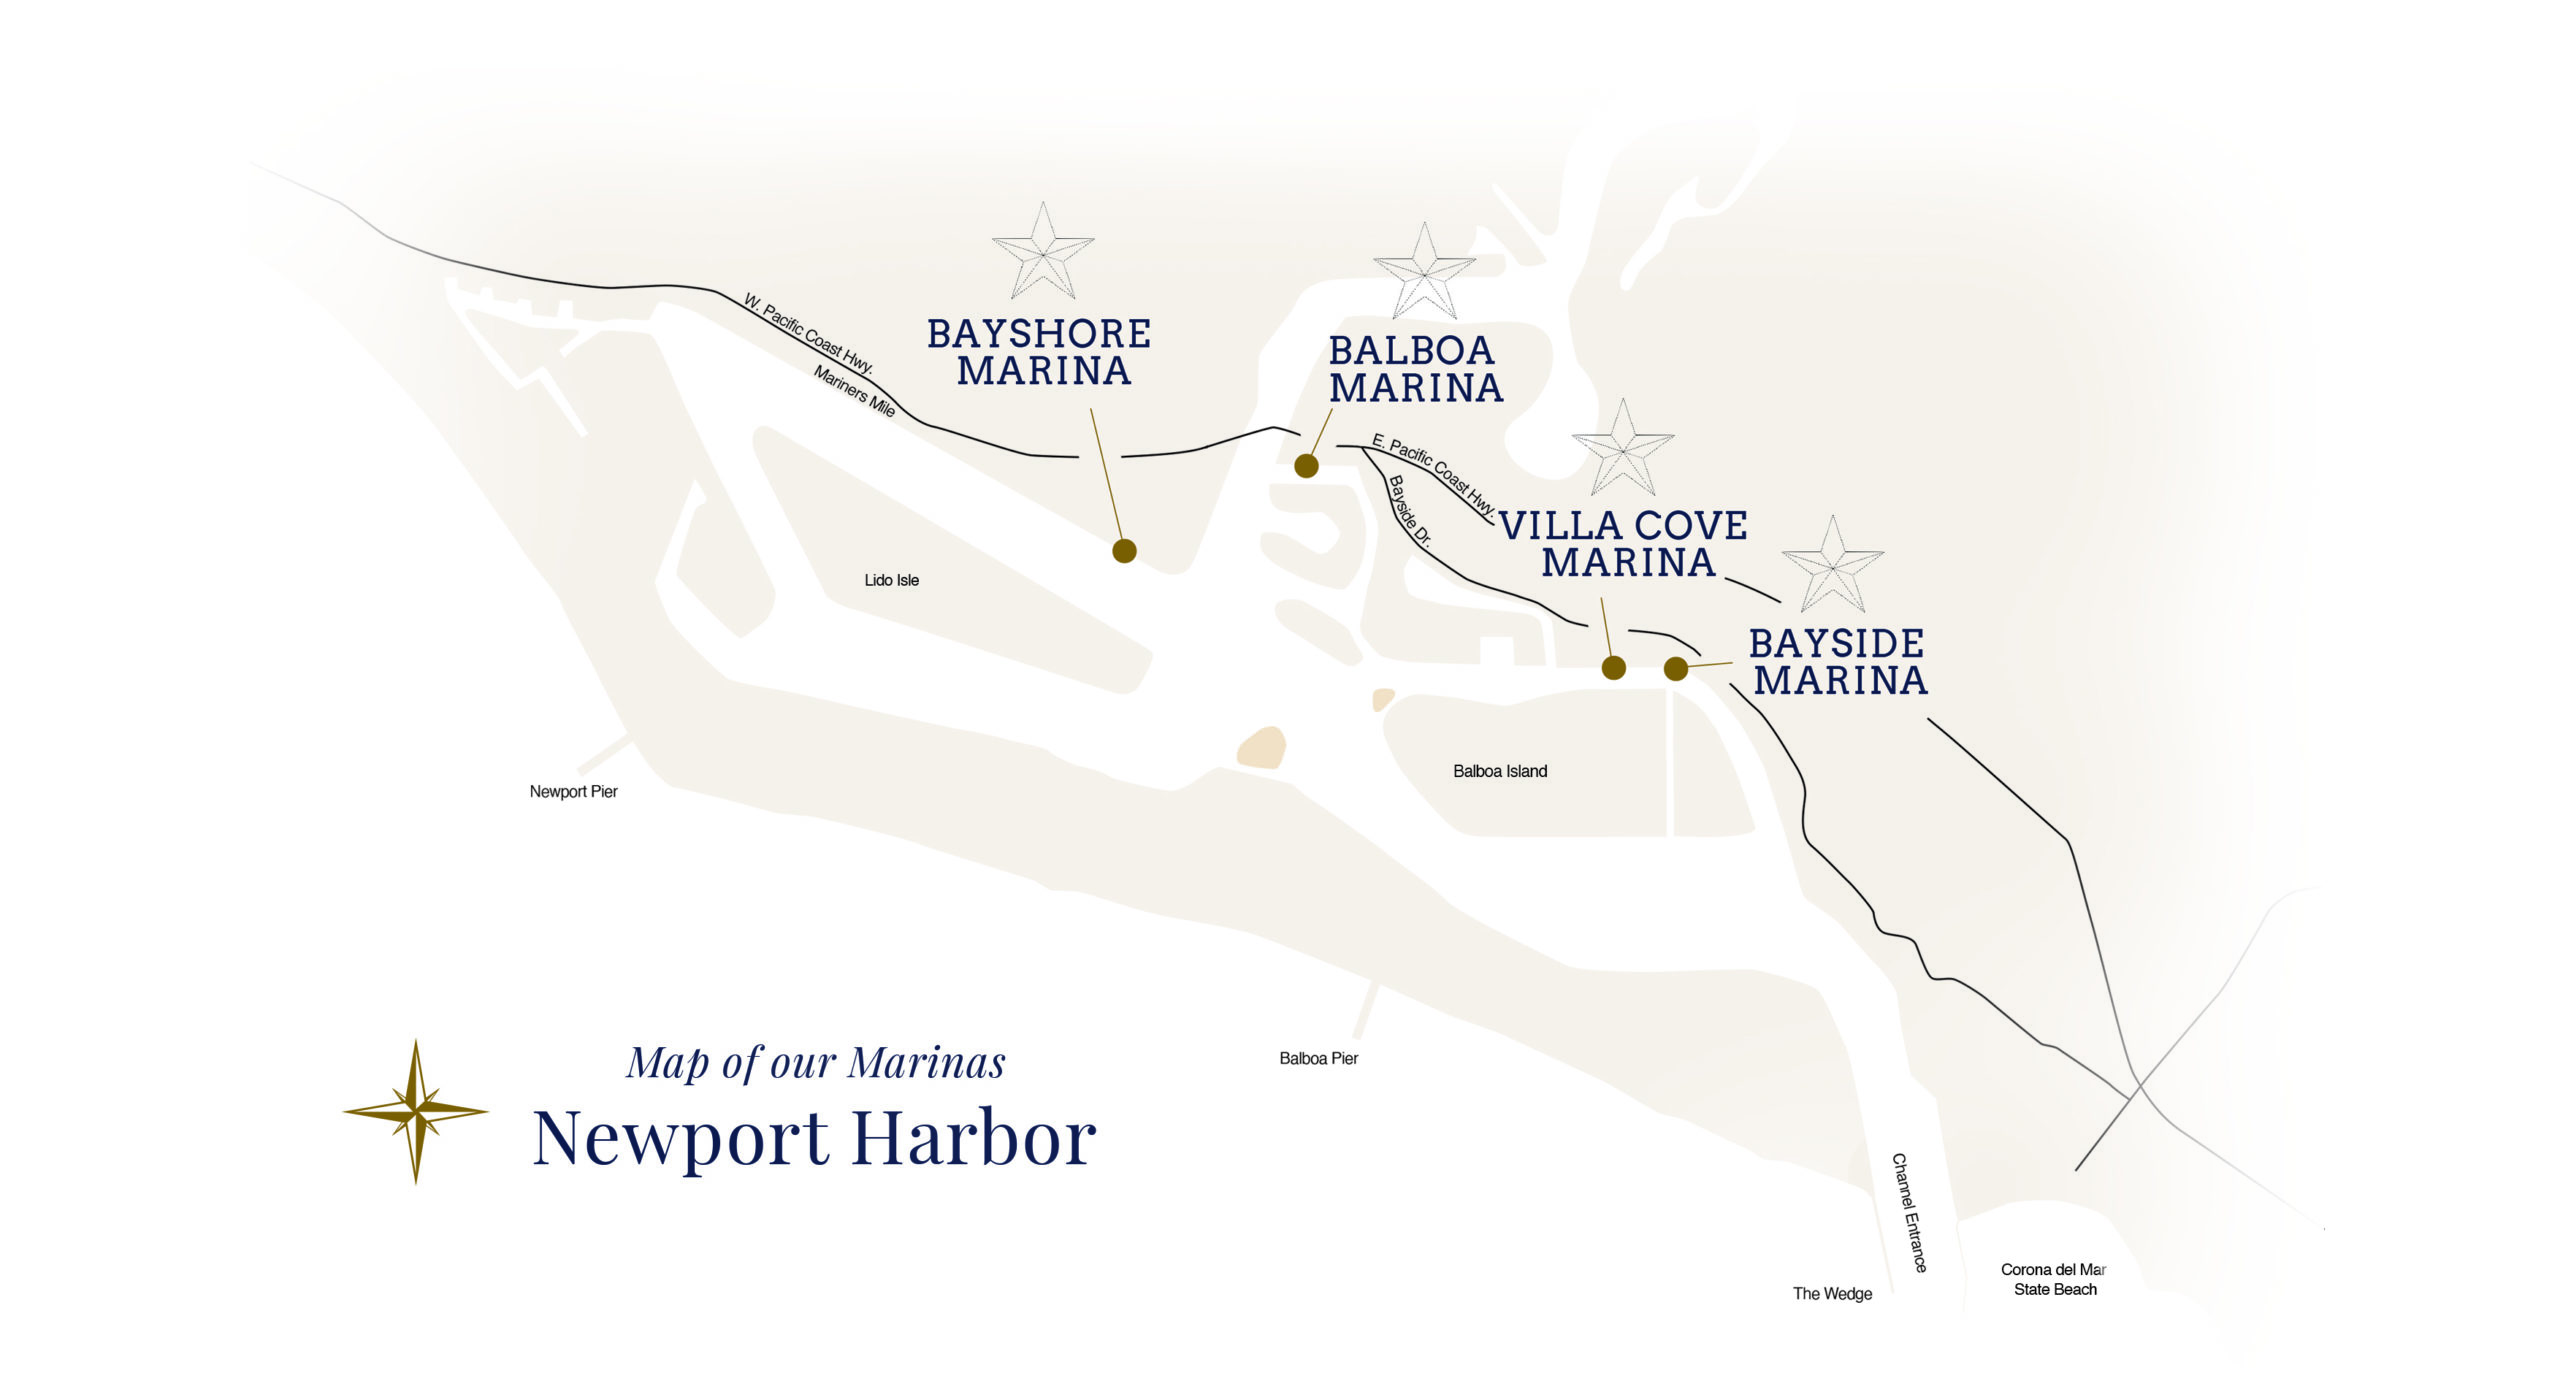 fashion island newport beach map